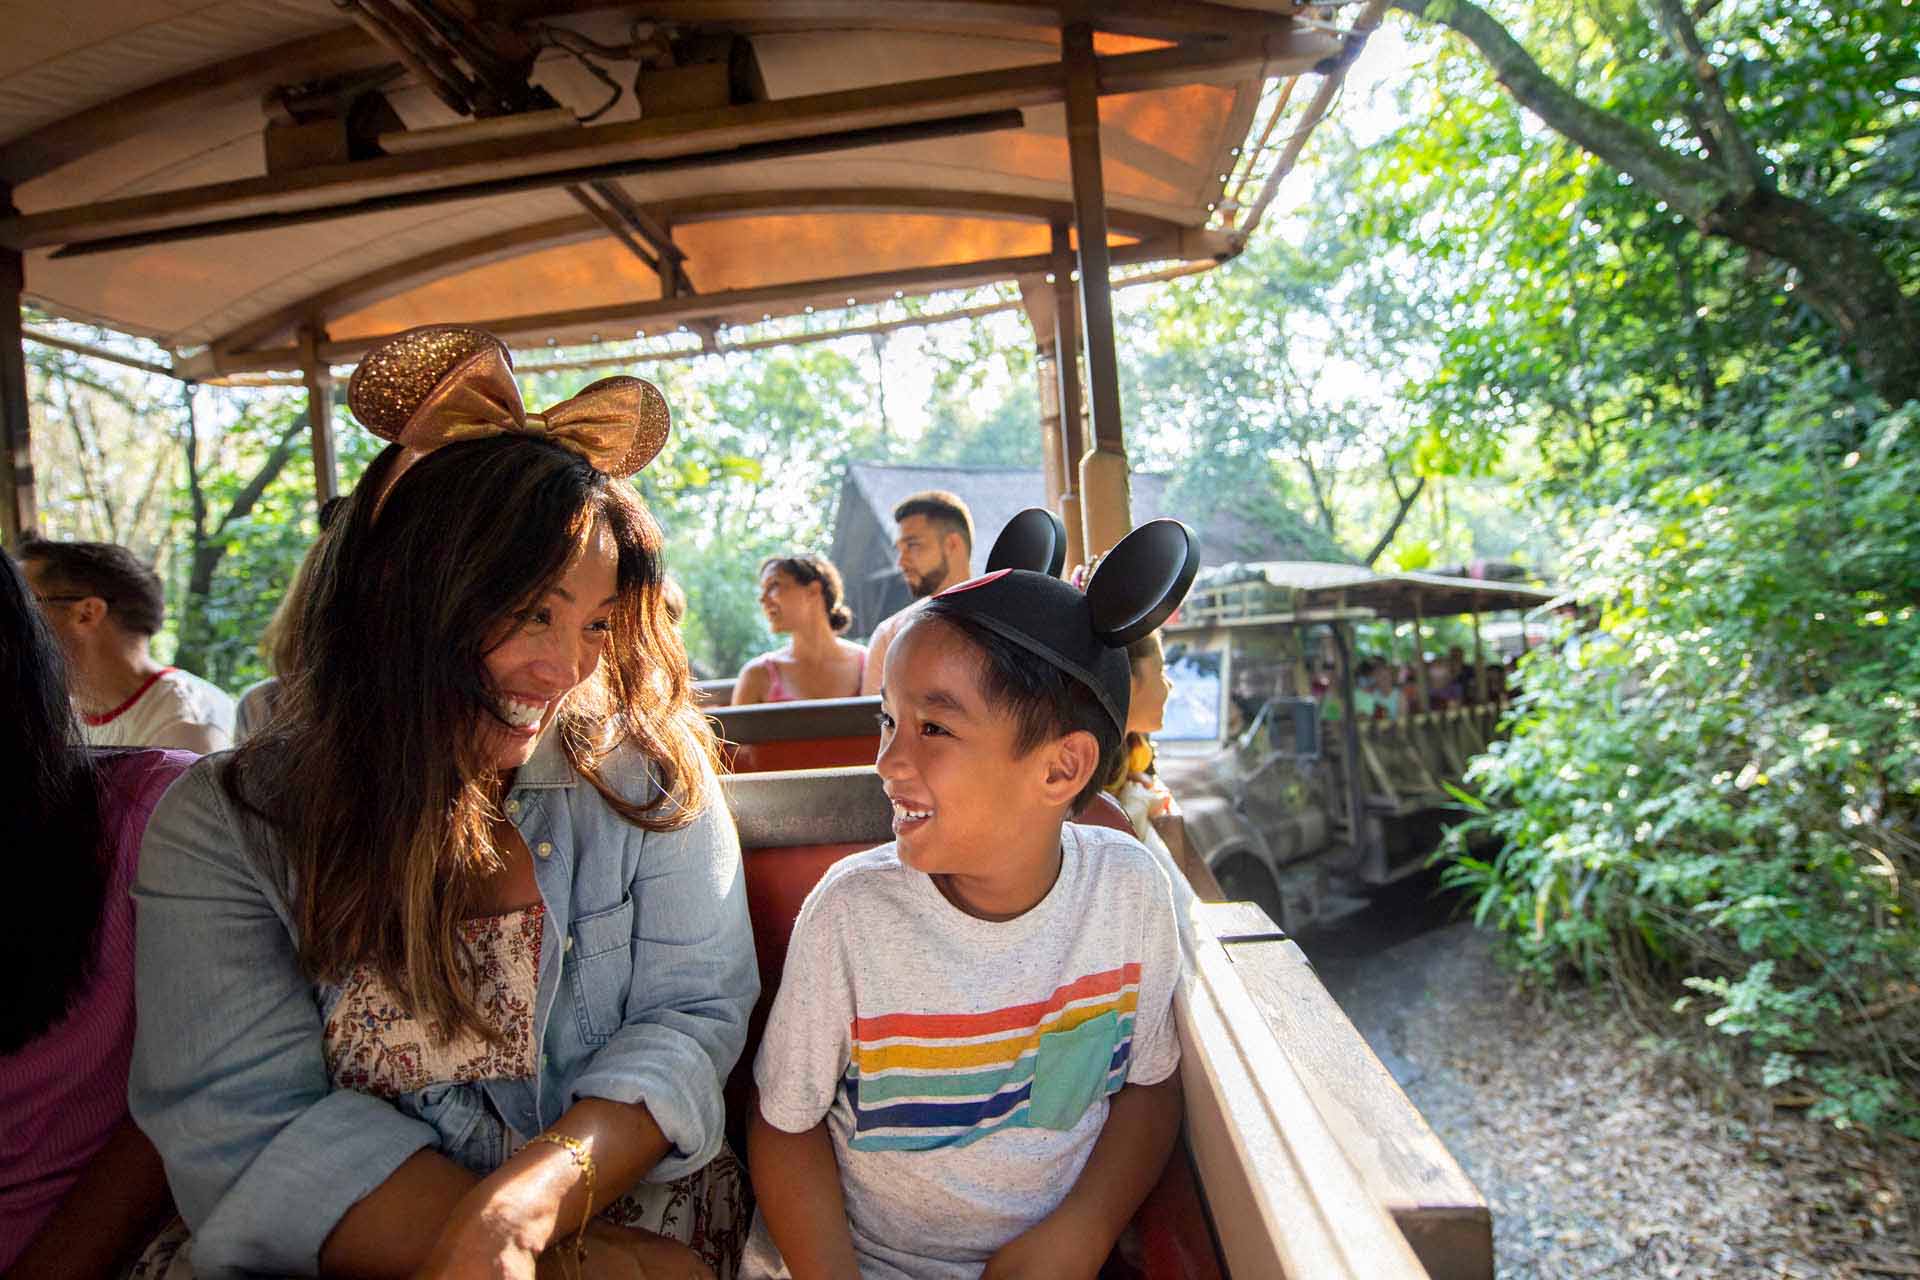 Mother and son riding the safari ride at Disney's Animal Kingdom